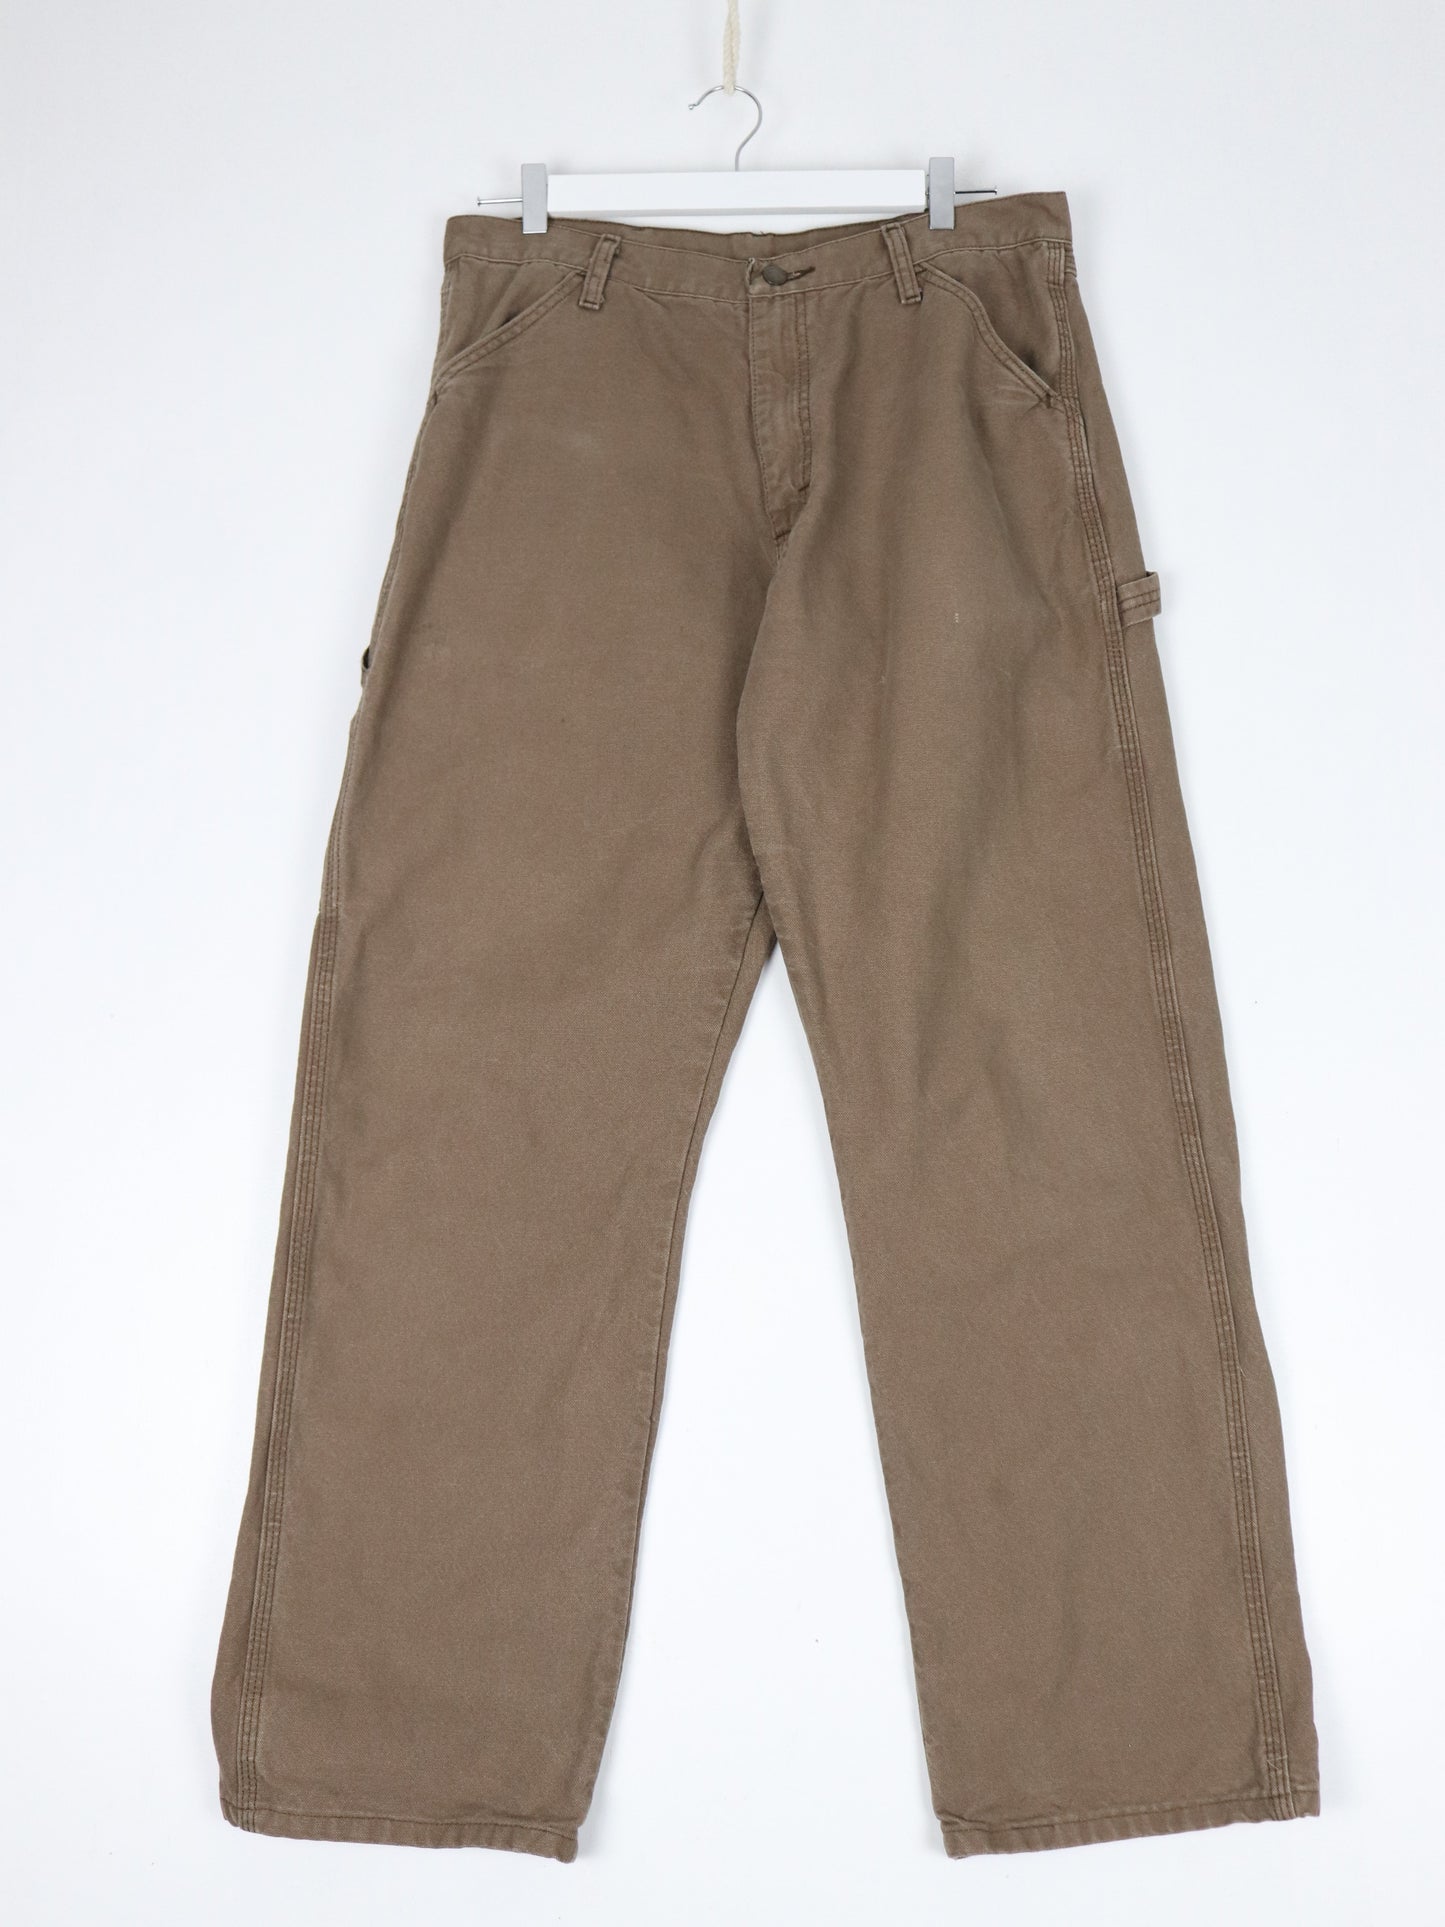 Rustler Pants Mens 34 x 32 Brown Carpenter Work Wear